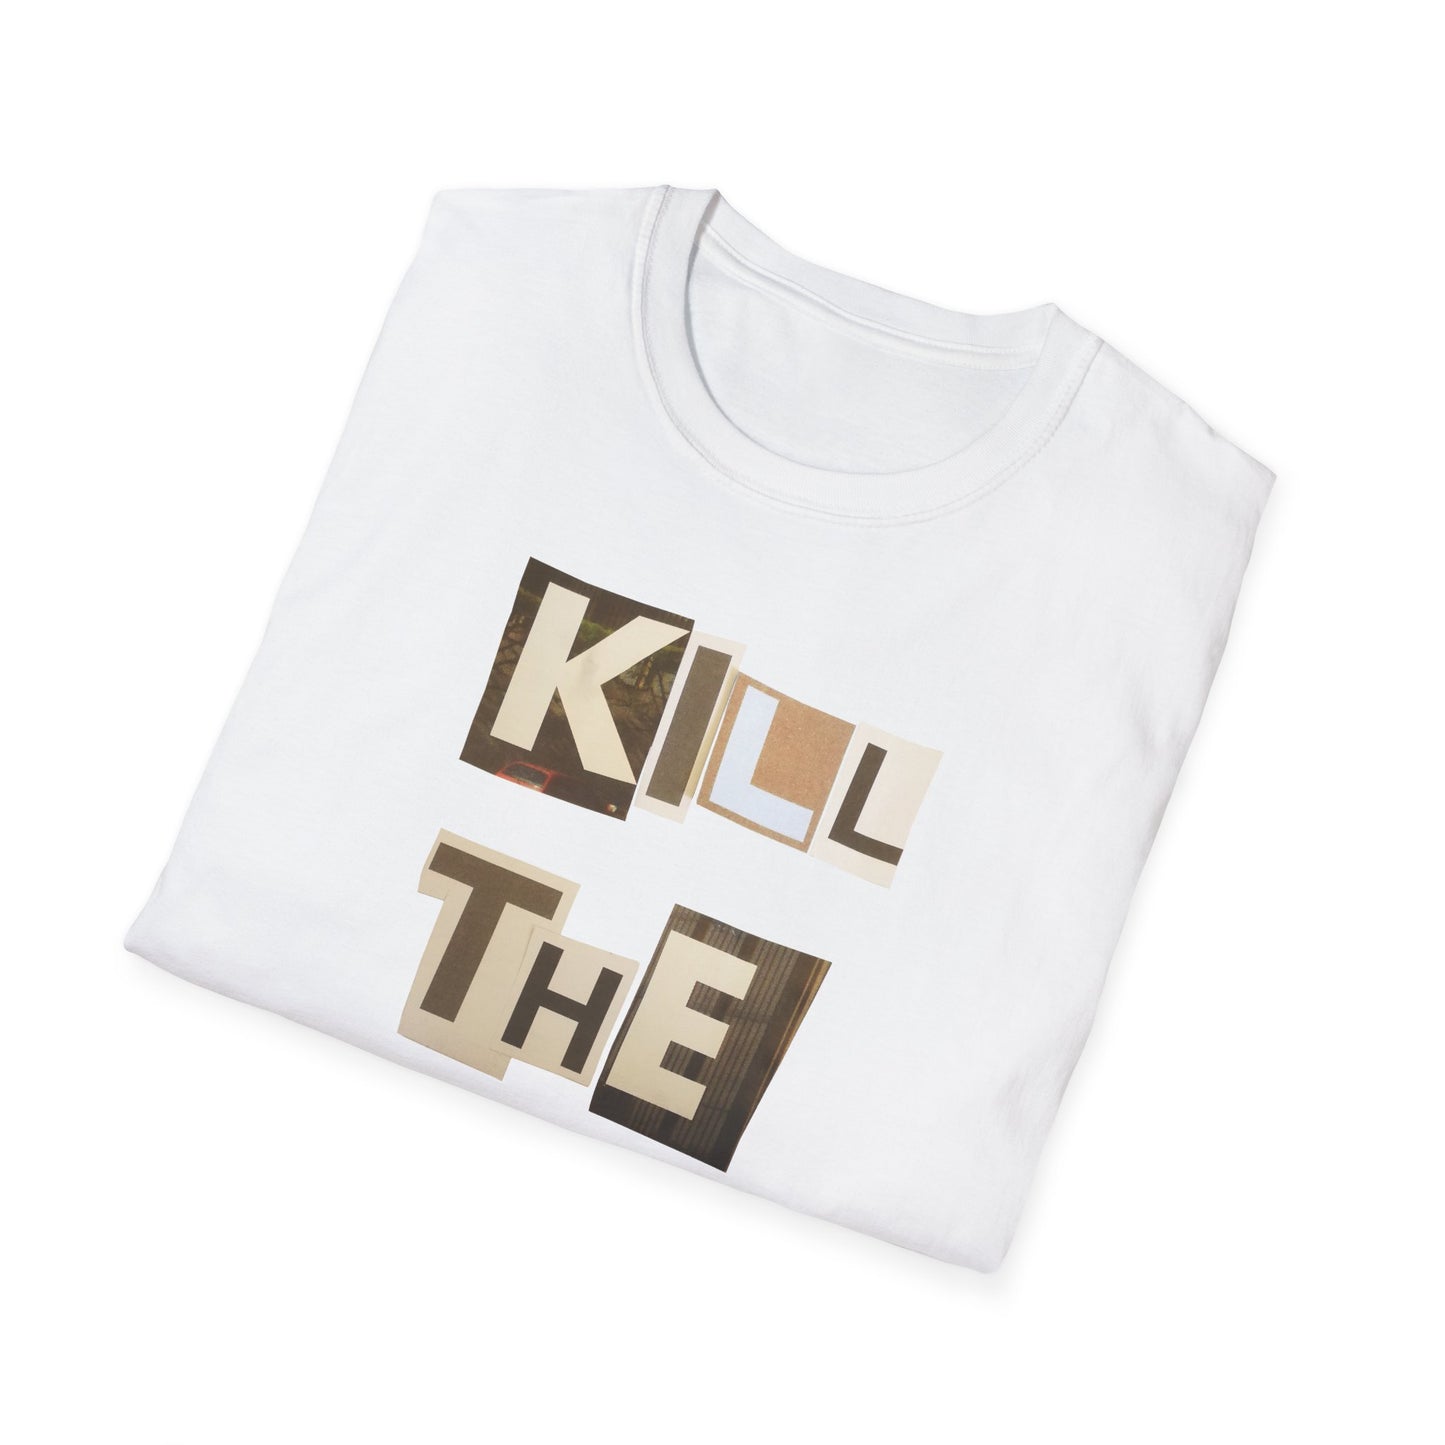 "kill the rich" Tin Foil Wear vs. Kaspar Colling Nielsen